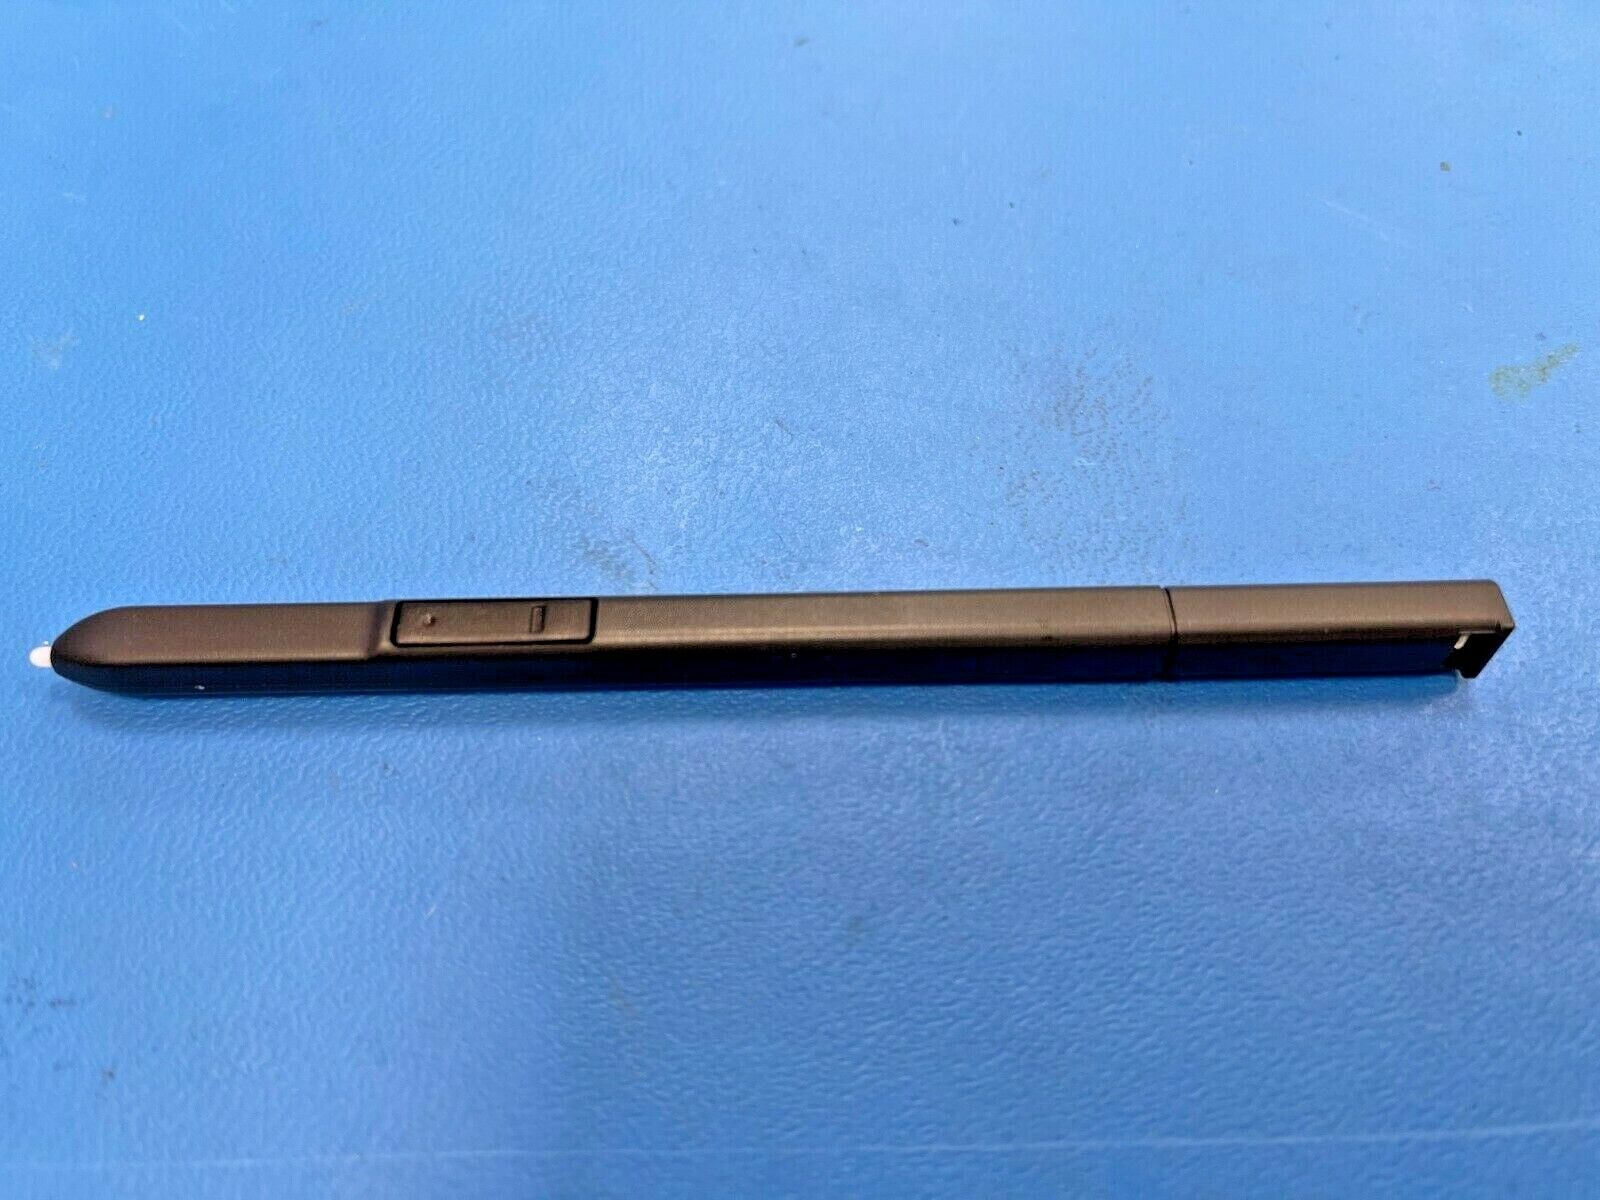 New Original Slim Stylus Digitizer Pen for Fujitsu Lifebook T904, T935, T936